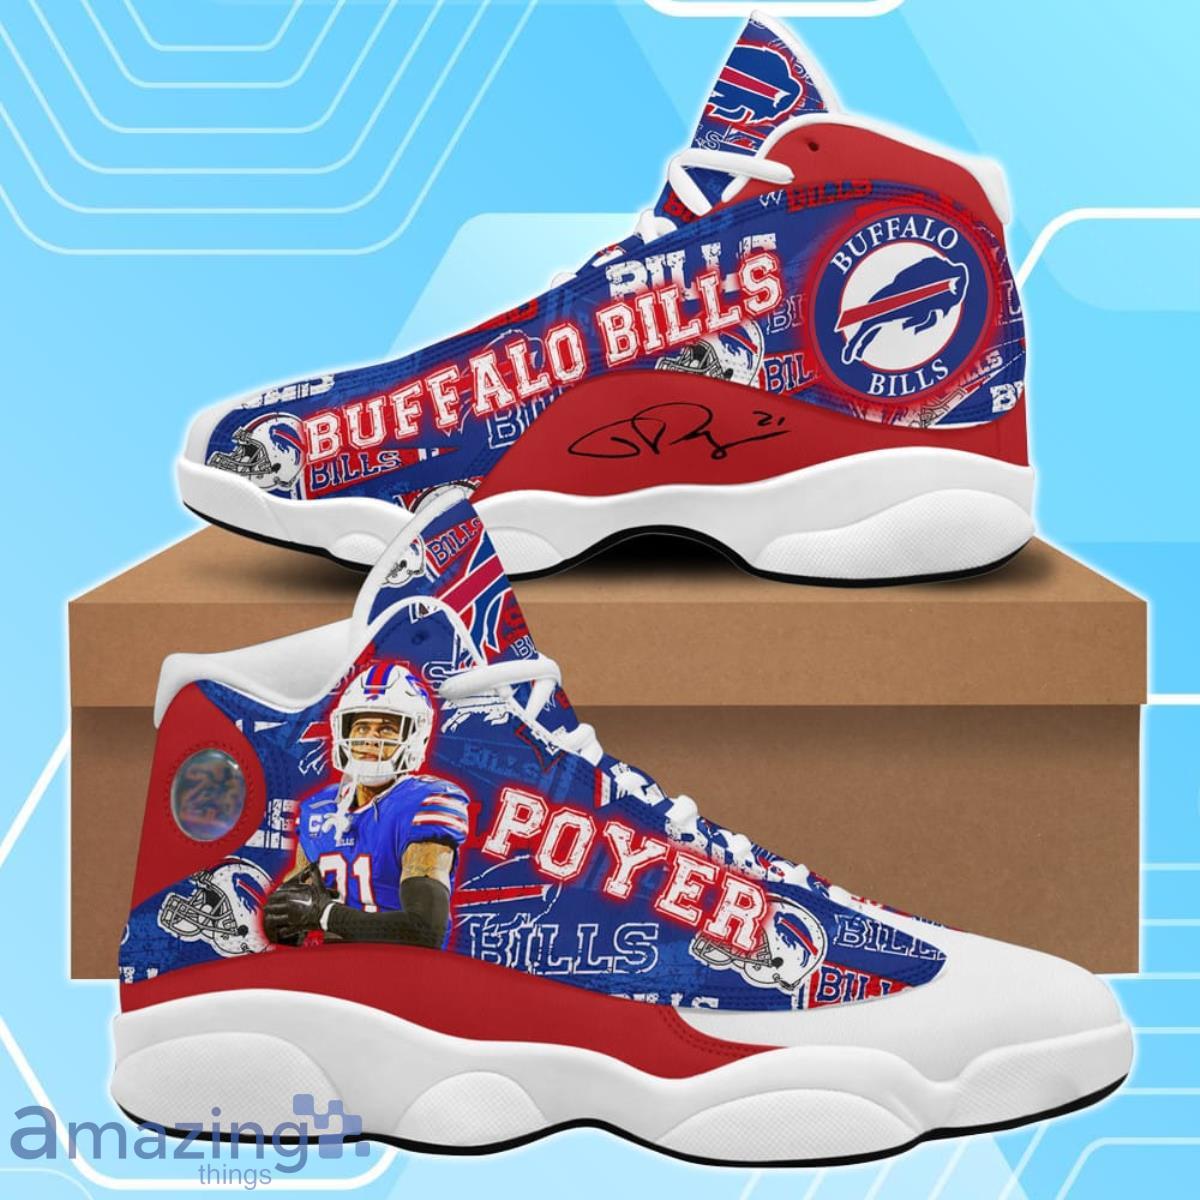 Buffalo Bills Jordan Poyer Air Jordan 13 Shoes For Men Women Product Photo 1